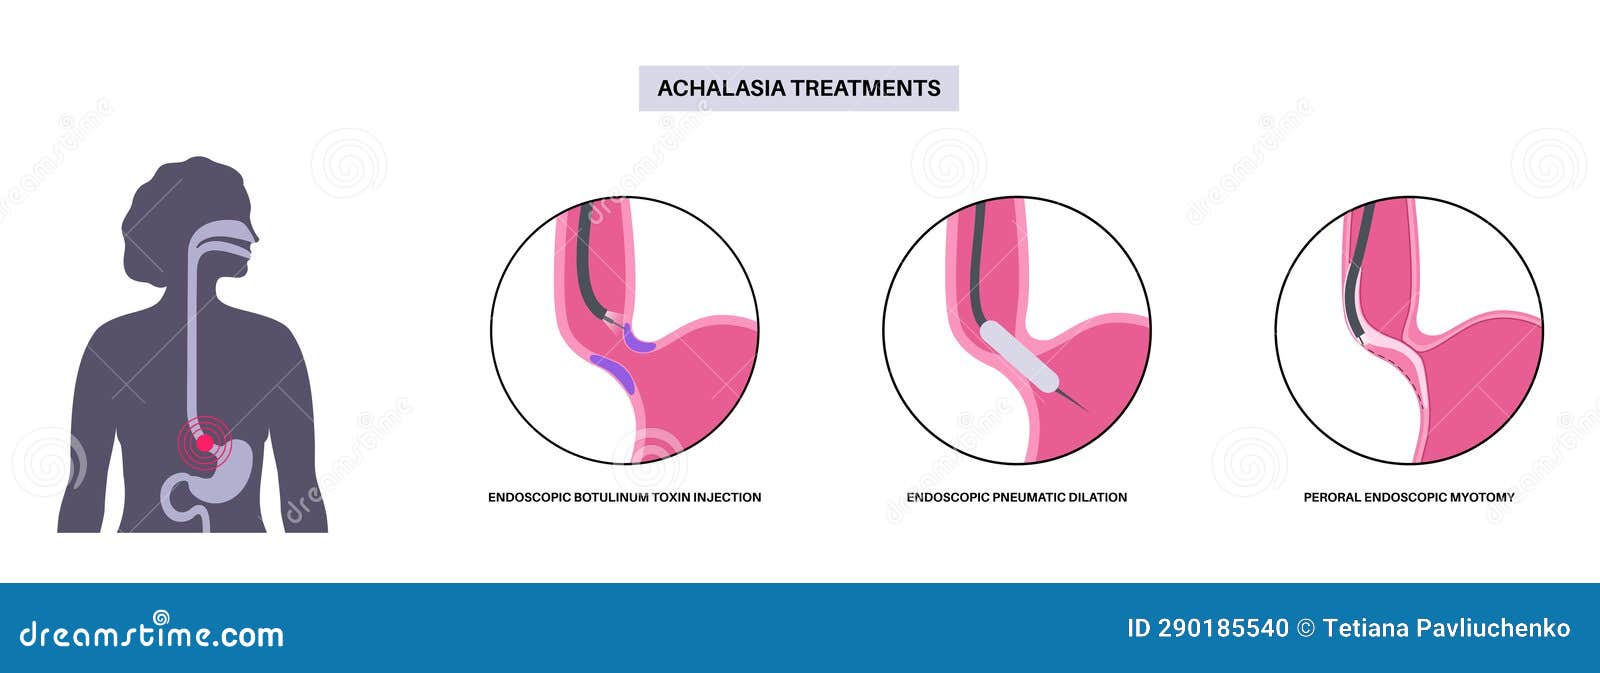 achalasia treatments procedures